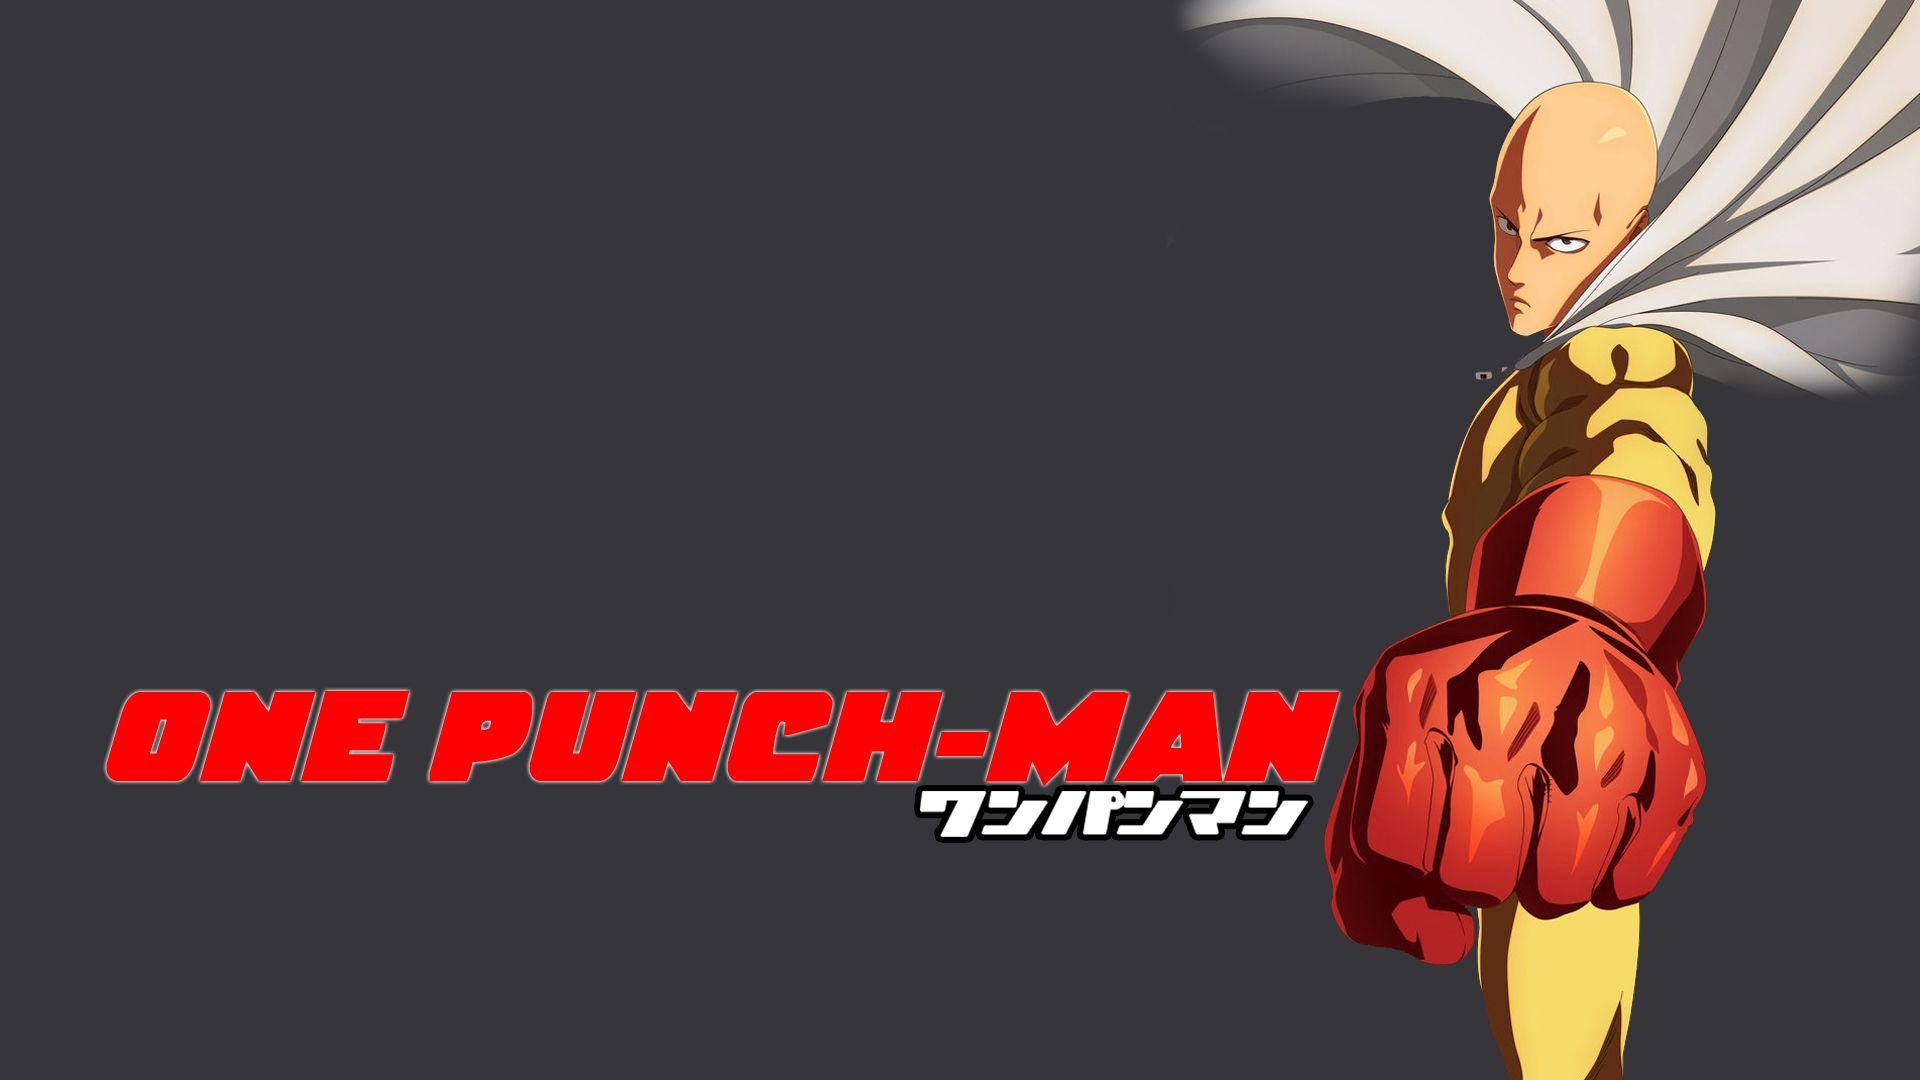 One Punch Man Pc Wallpaper 4k - Wallpaperforu